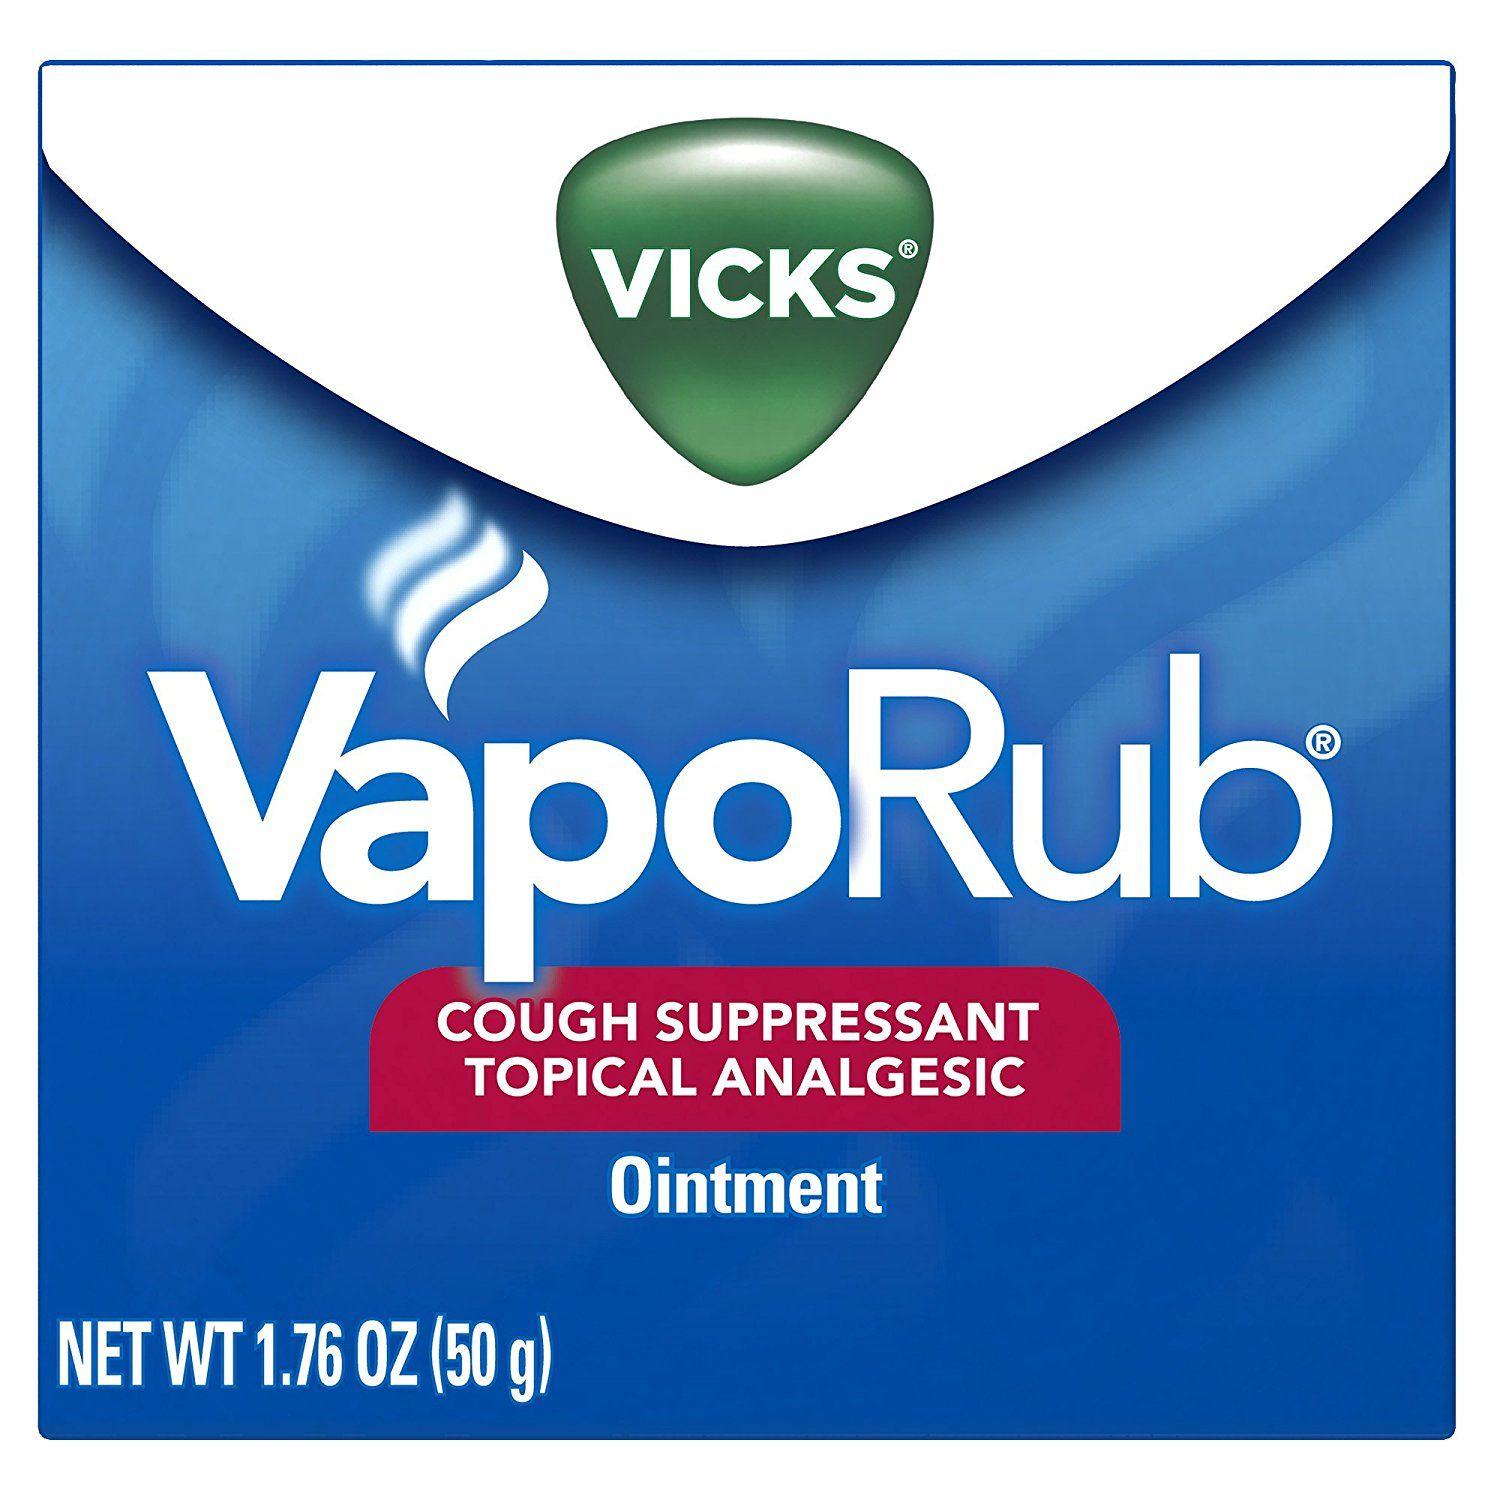 Vicks Logo - Vicks VapoRub Soothing Chest Rub Cough Suppressant, 1.76 Oz, Powerful